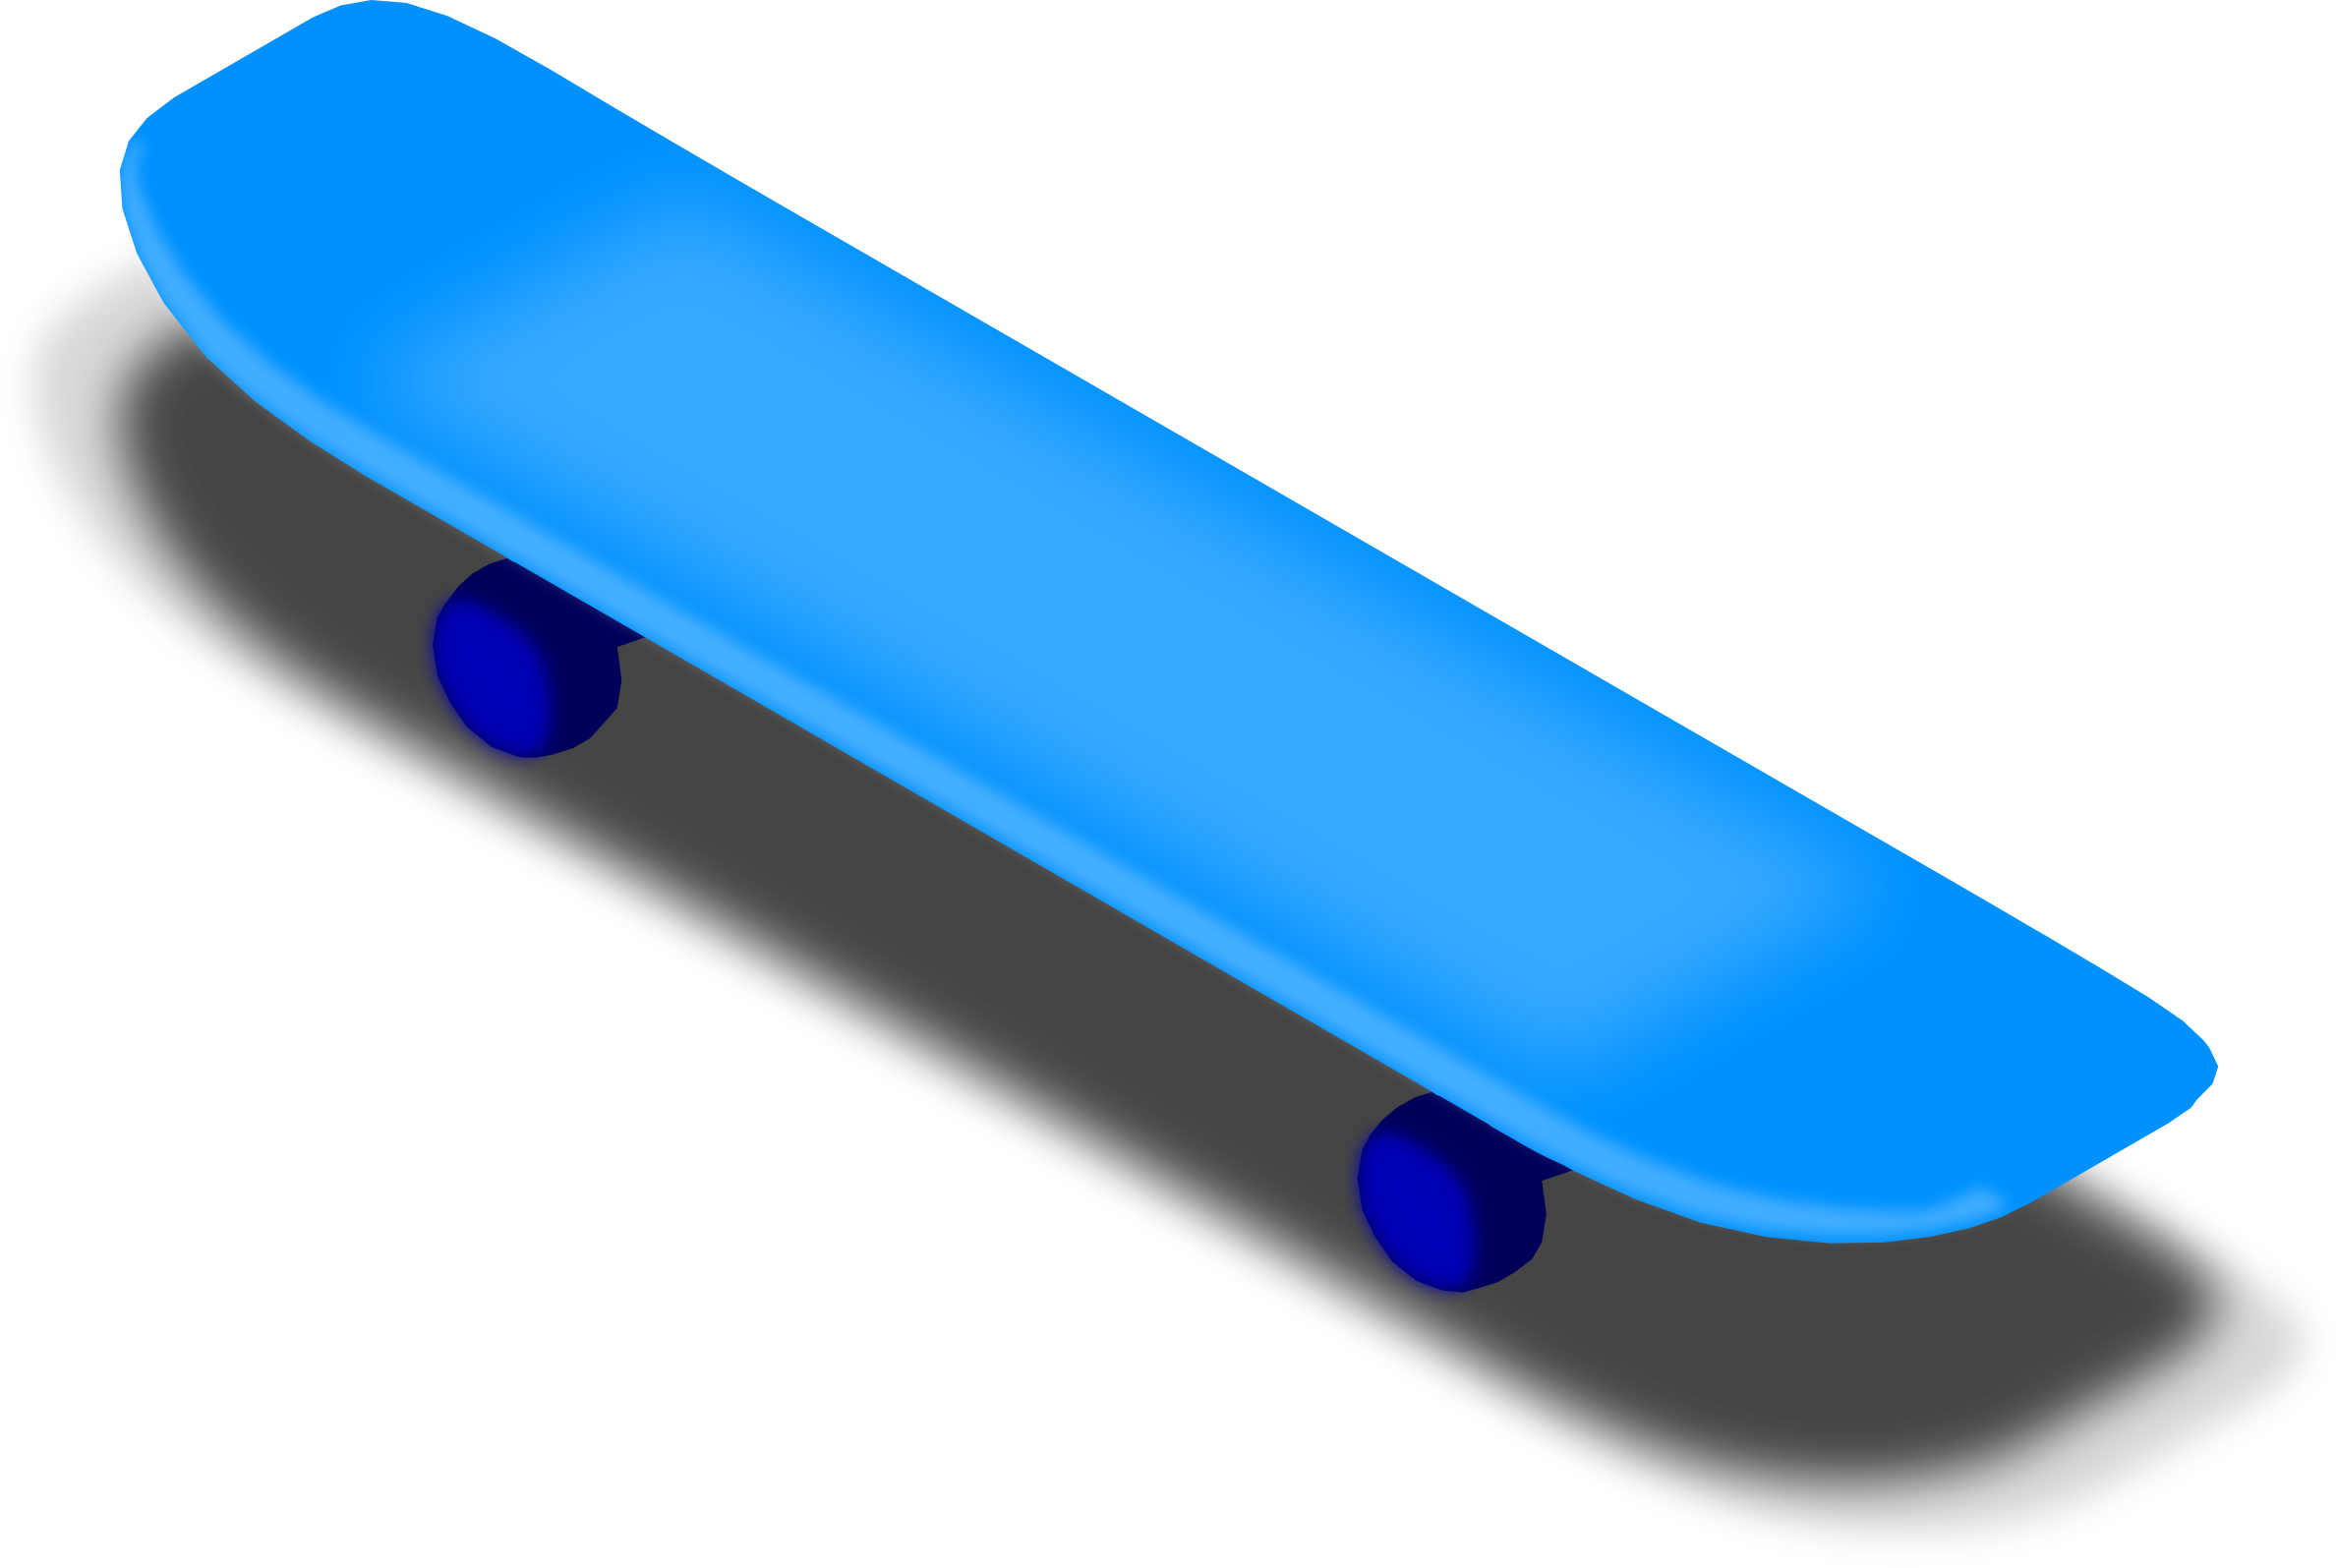 Skateboard - Portable Network Graphics (2376x1595)